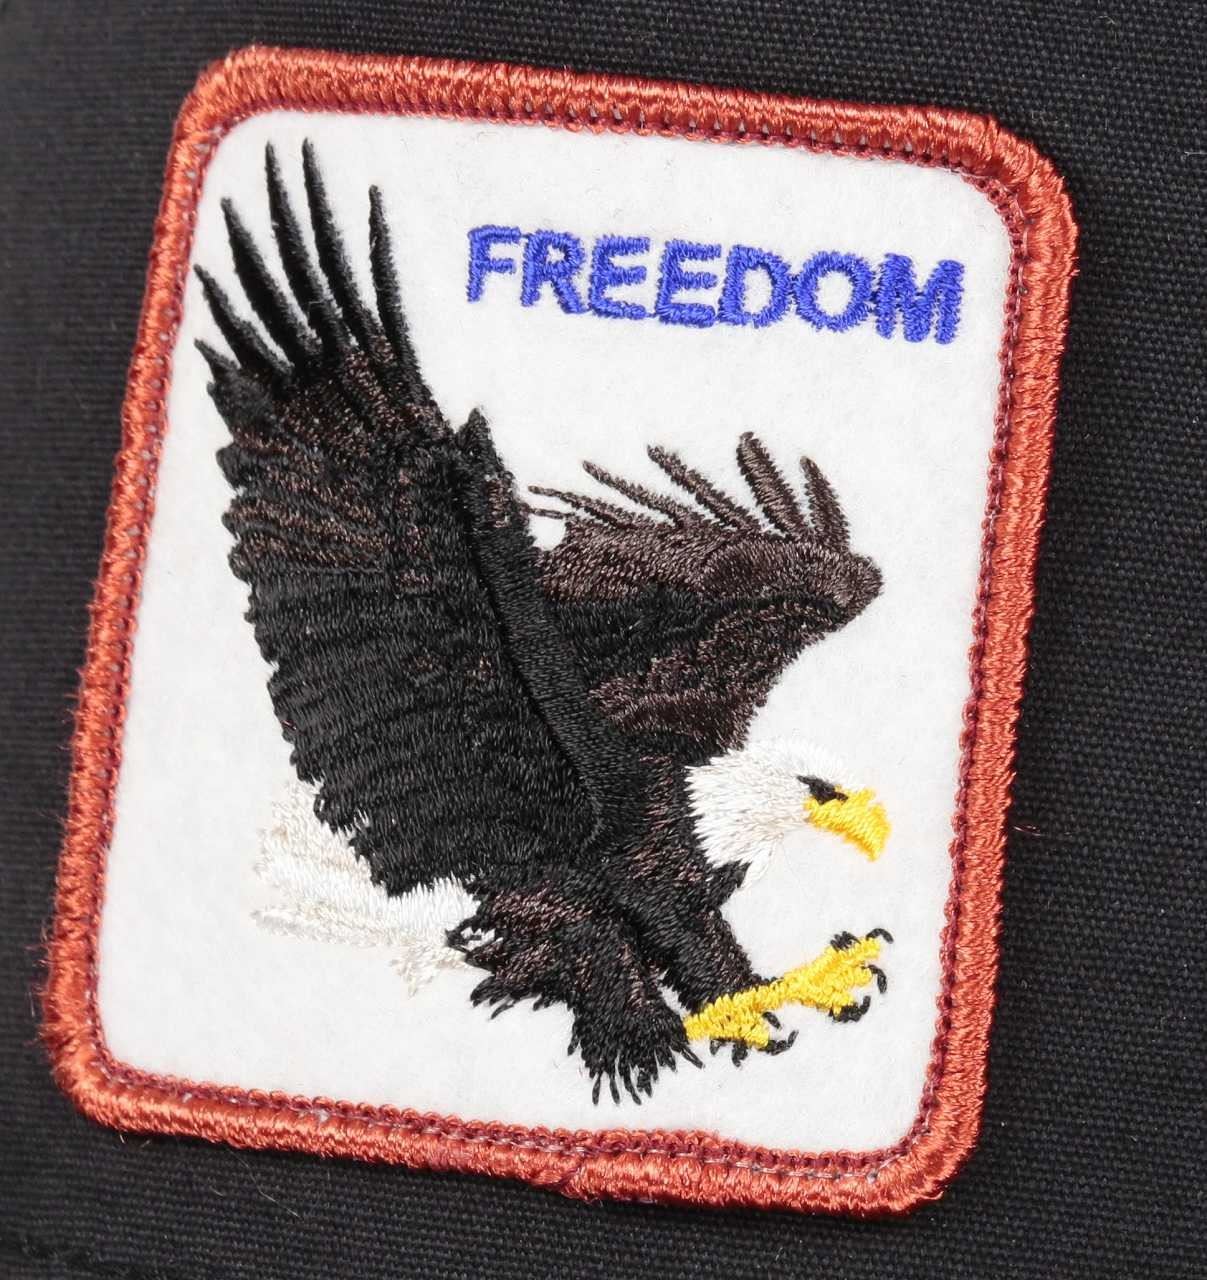 Freedom / Falke Black Trucker Cap Goorin Bros